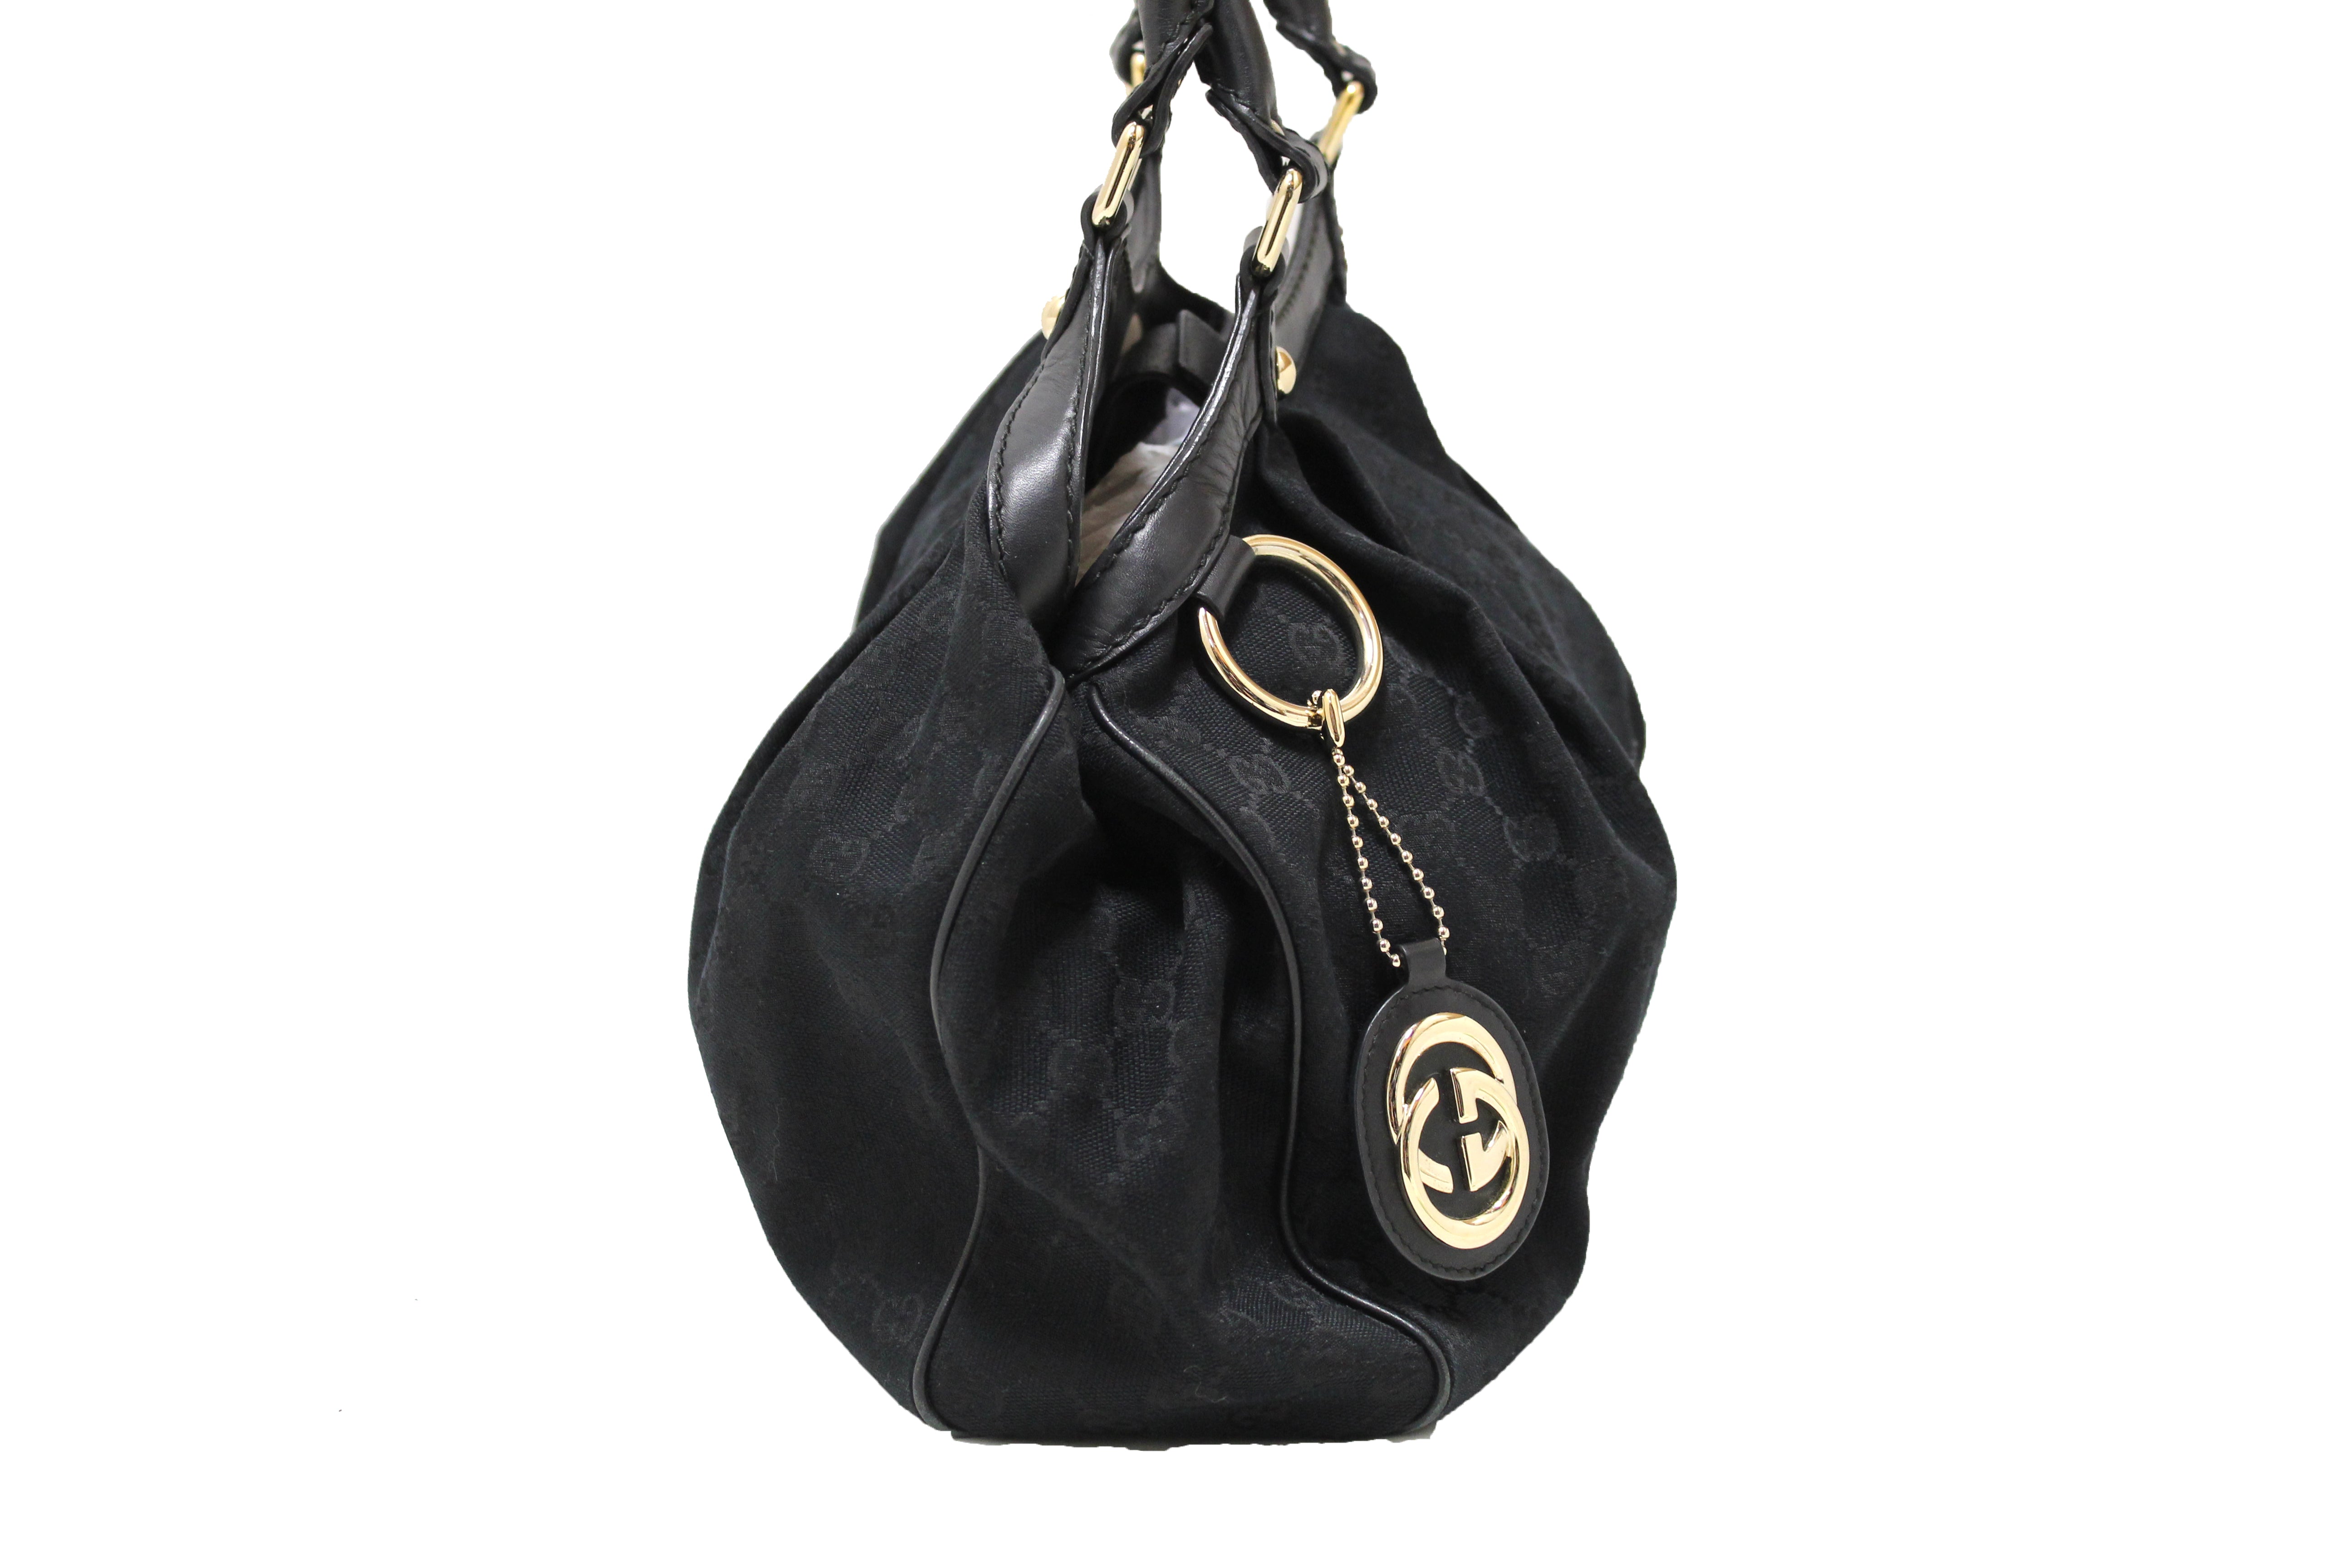 Gucci Medium Sukey Tote Bag